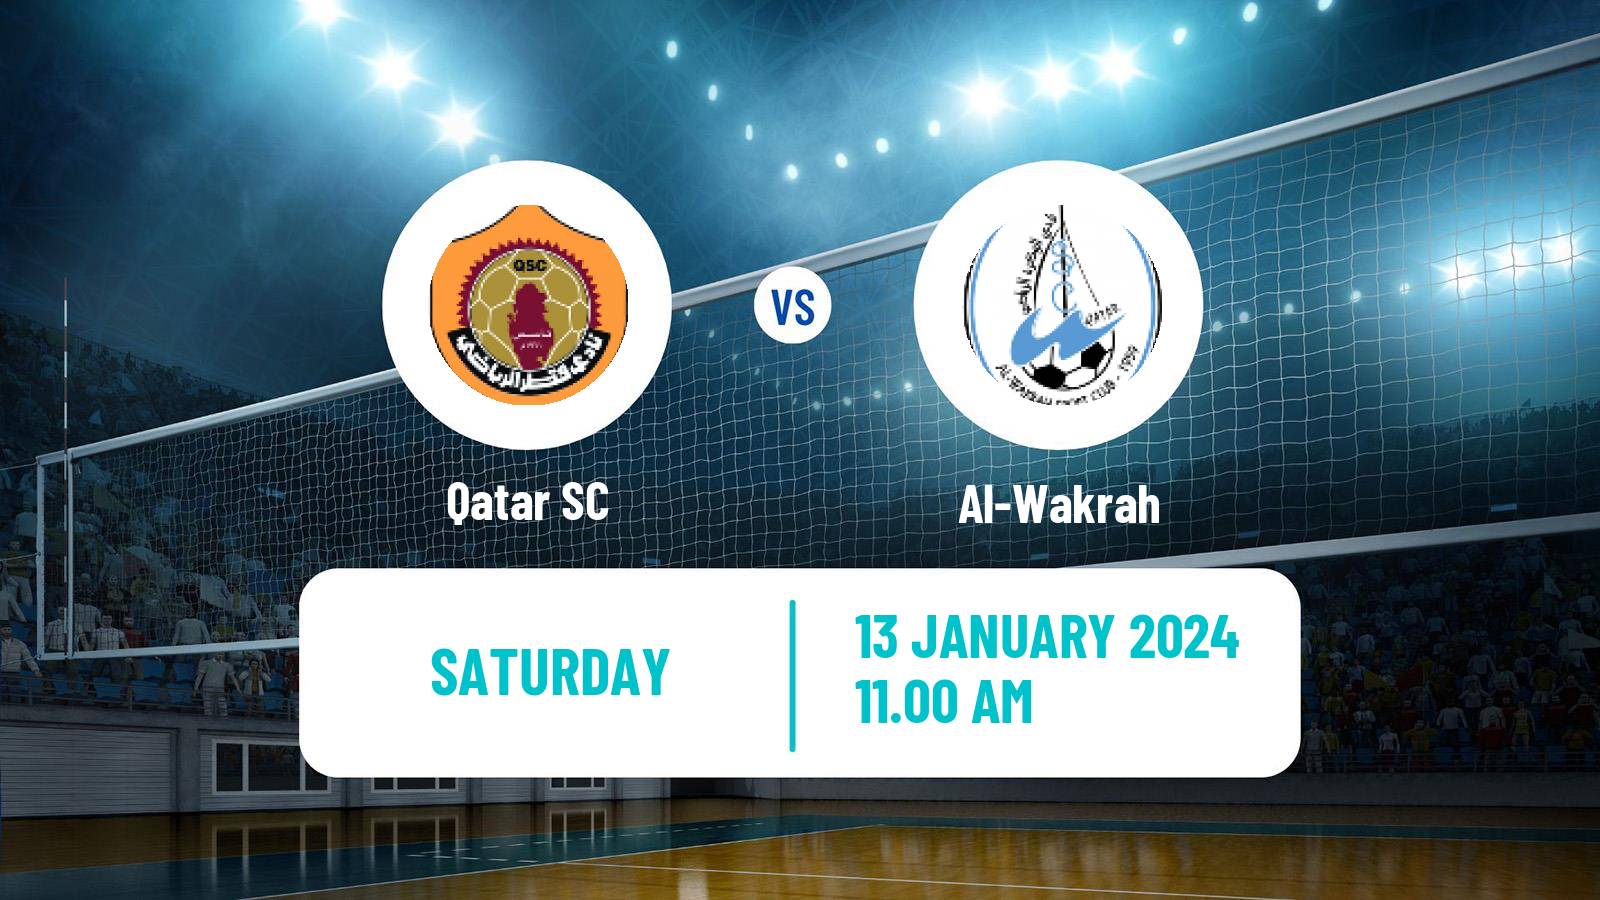 Volleyball Qatar Volleyball League Qatar SC - Al-Wakrah